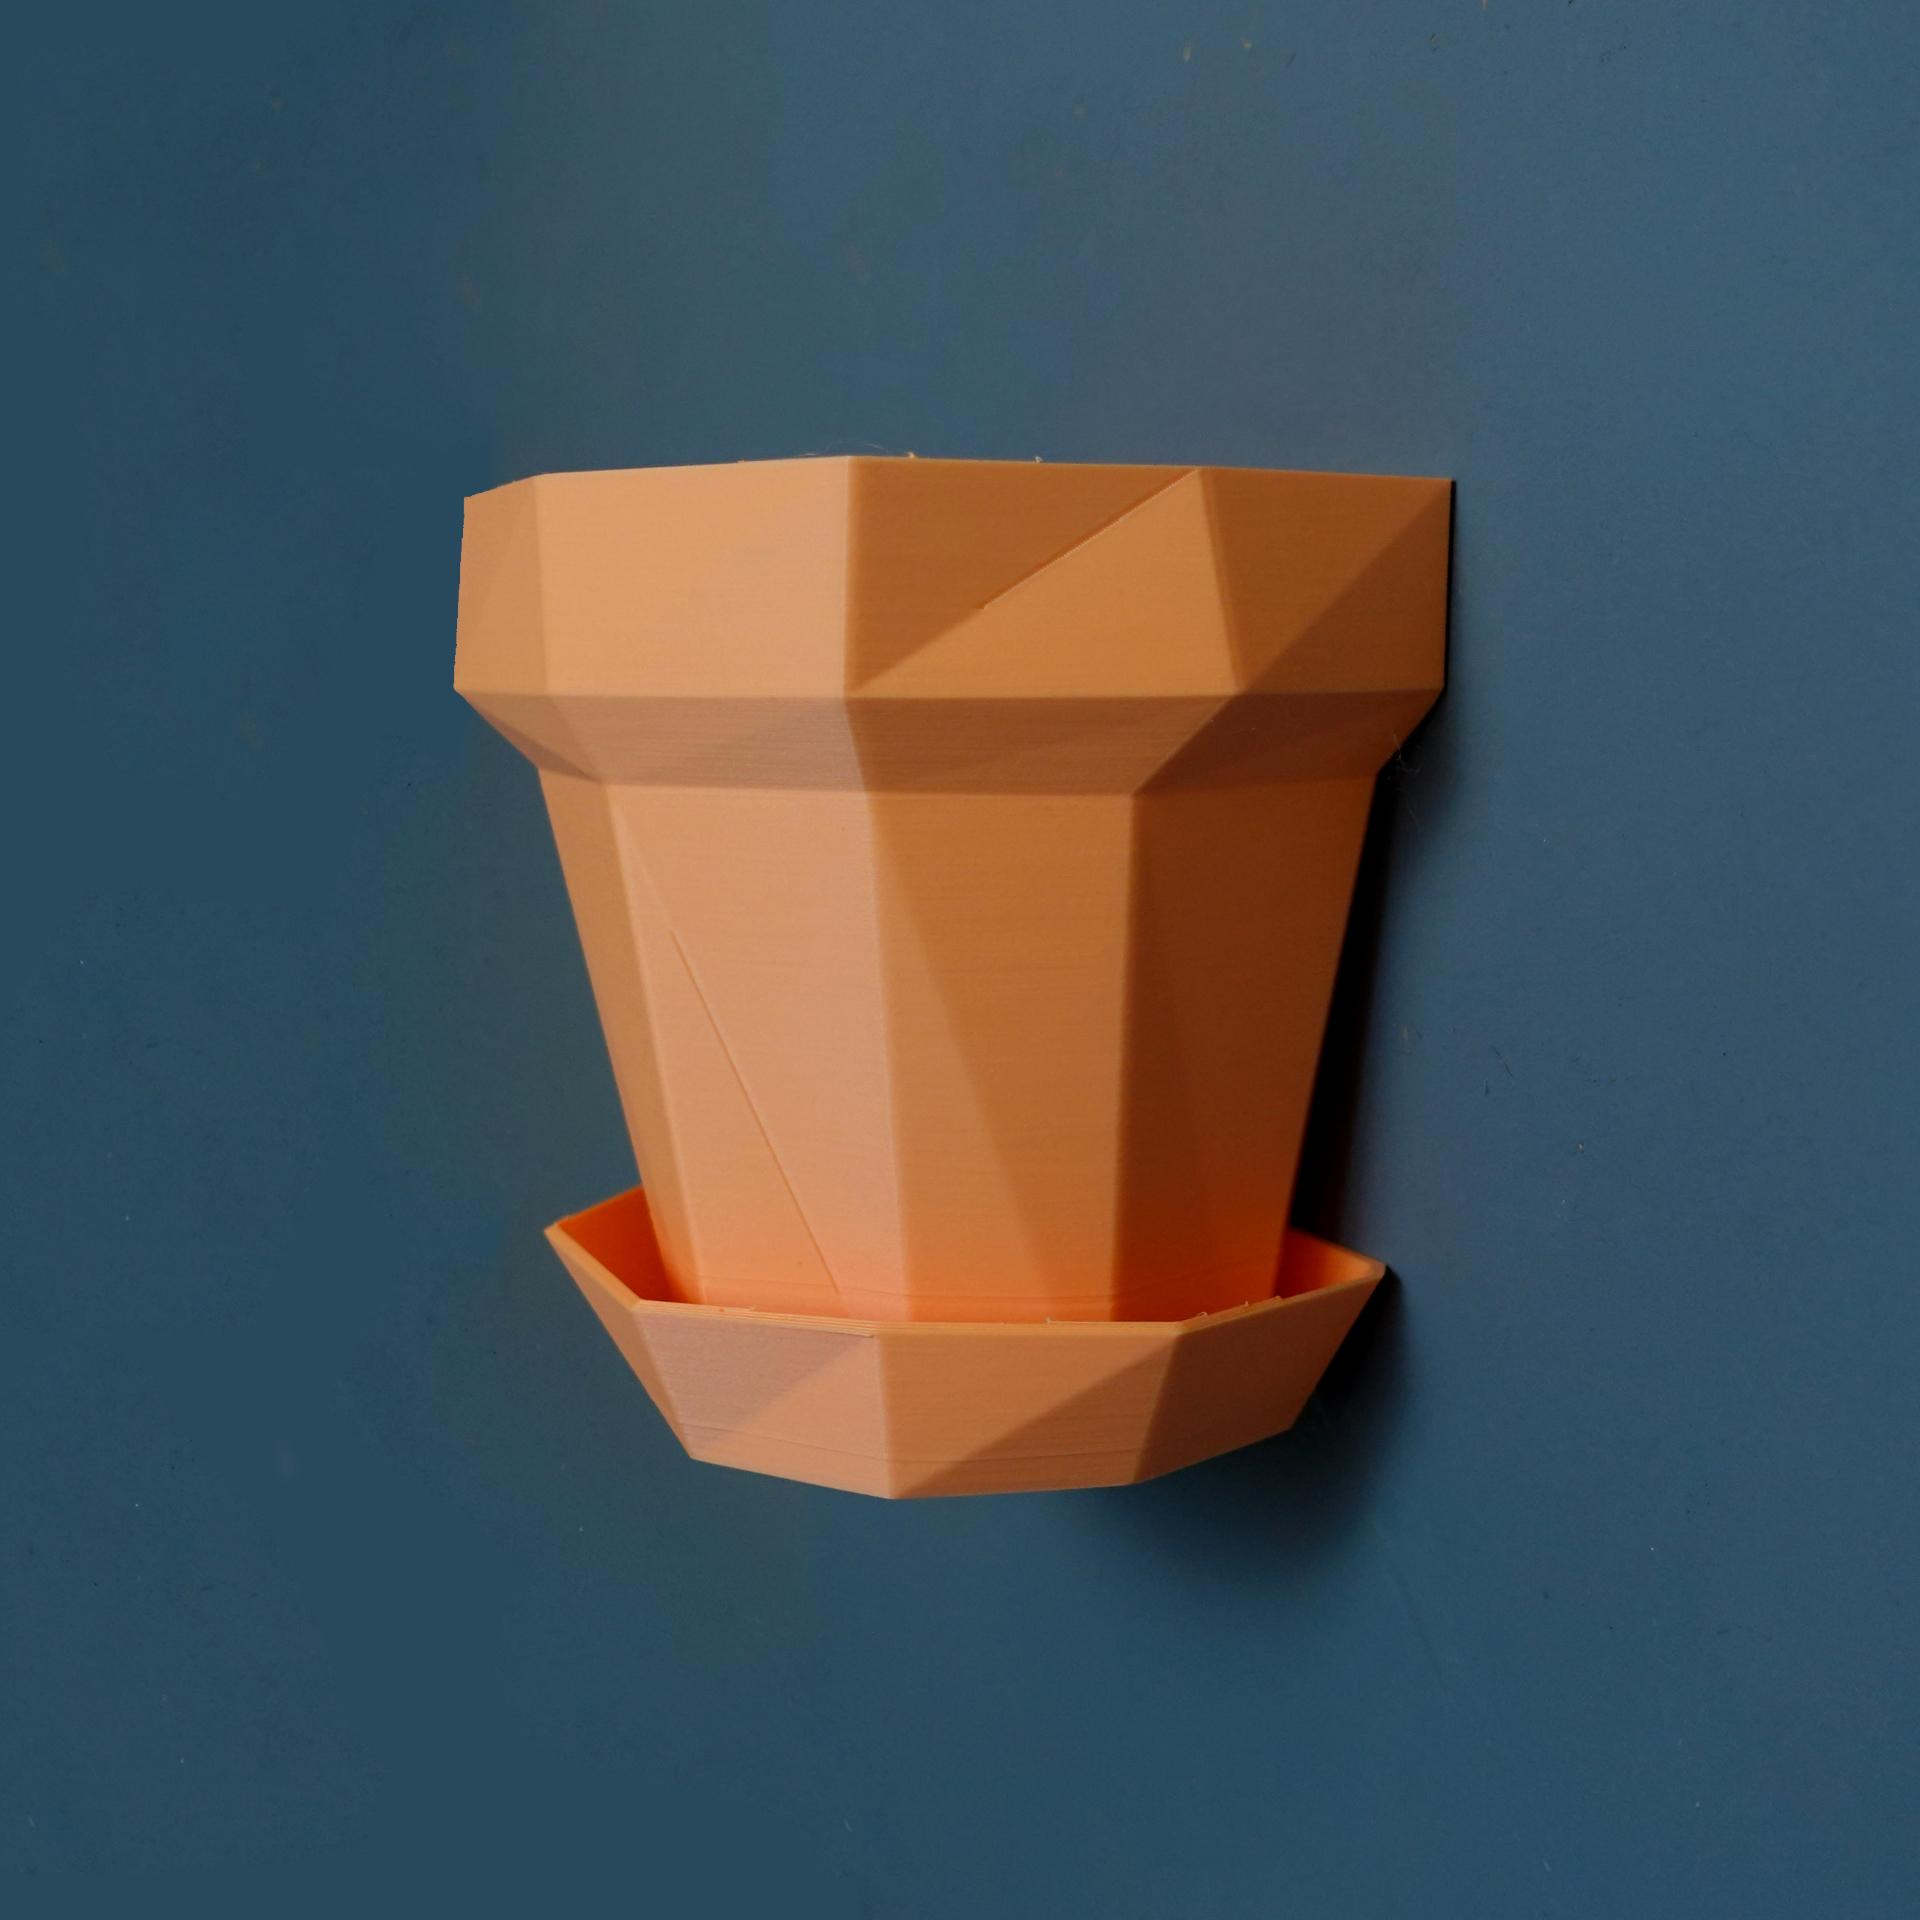 Wall planter “Glitch” 3d model